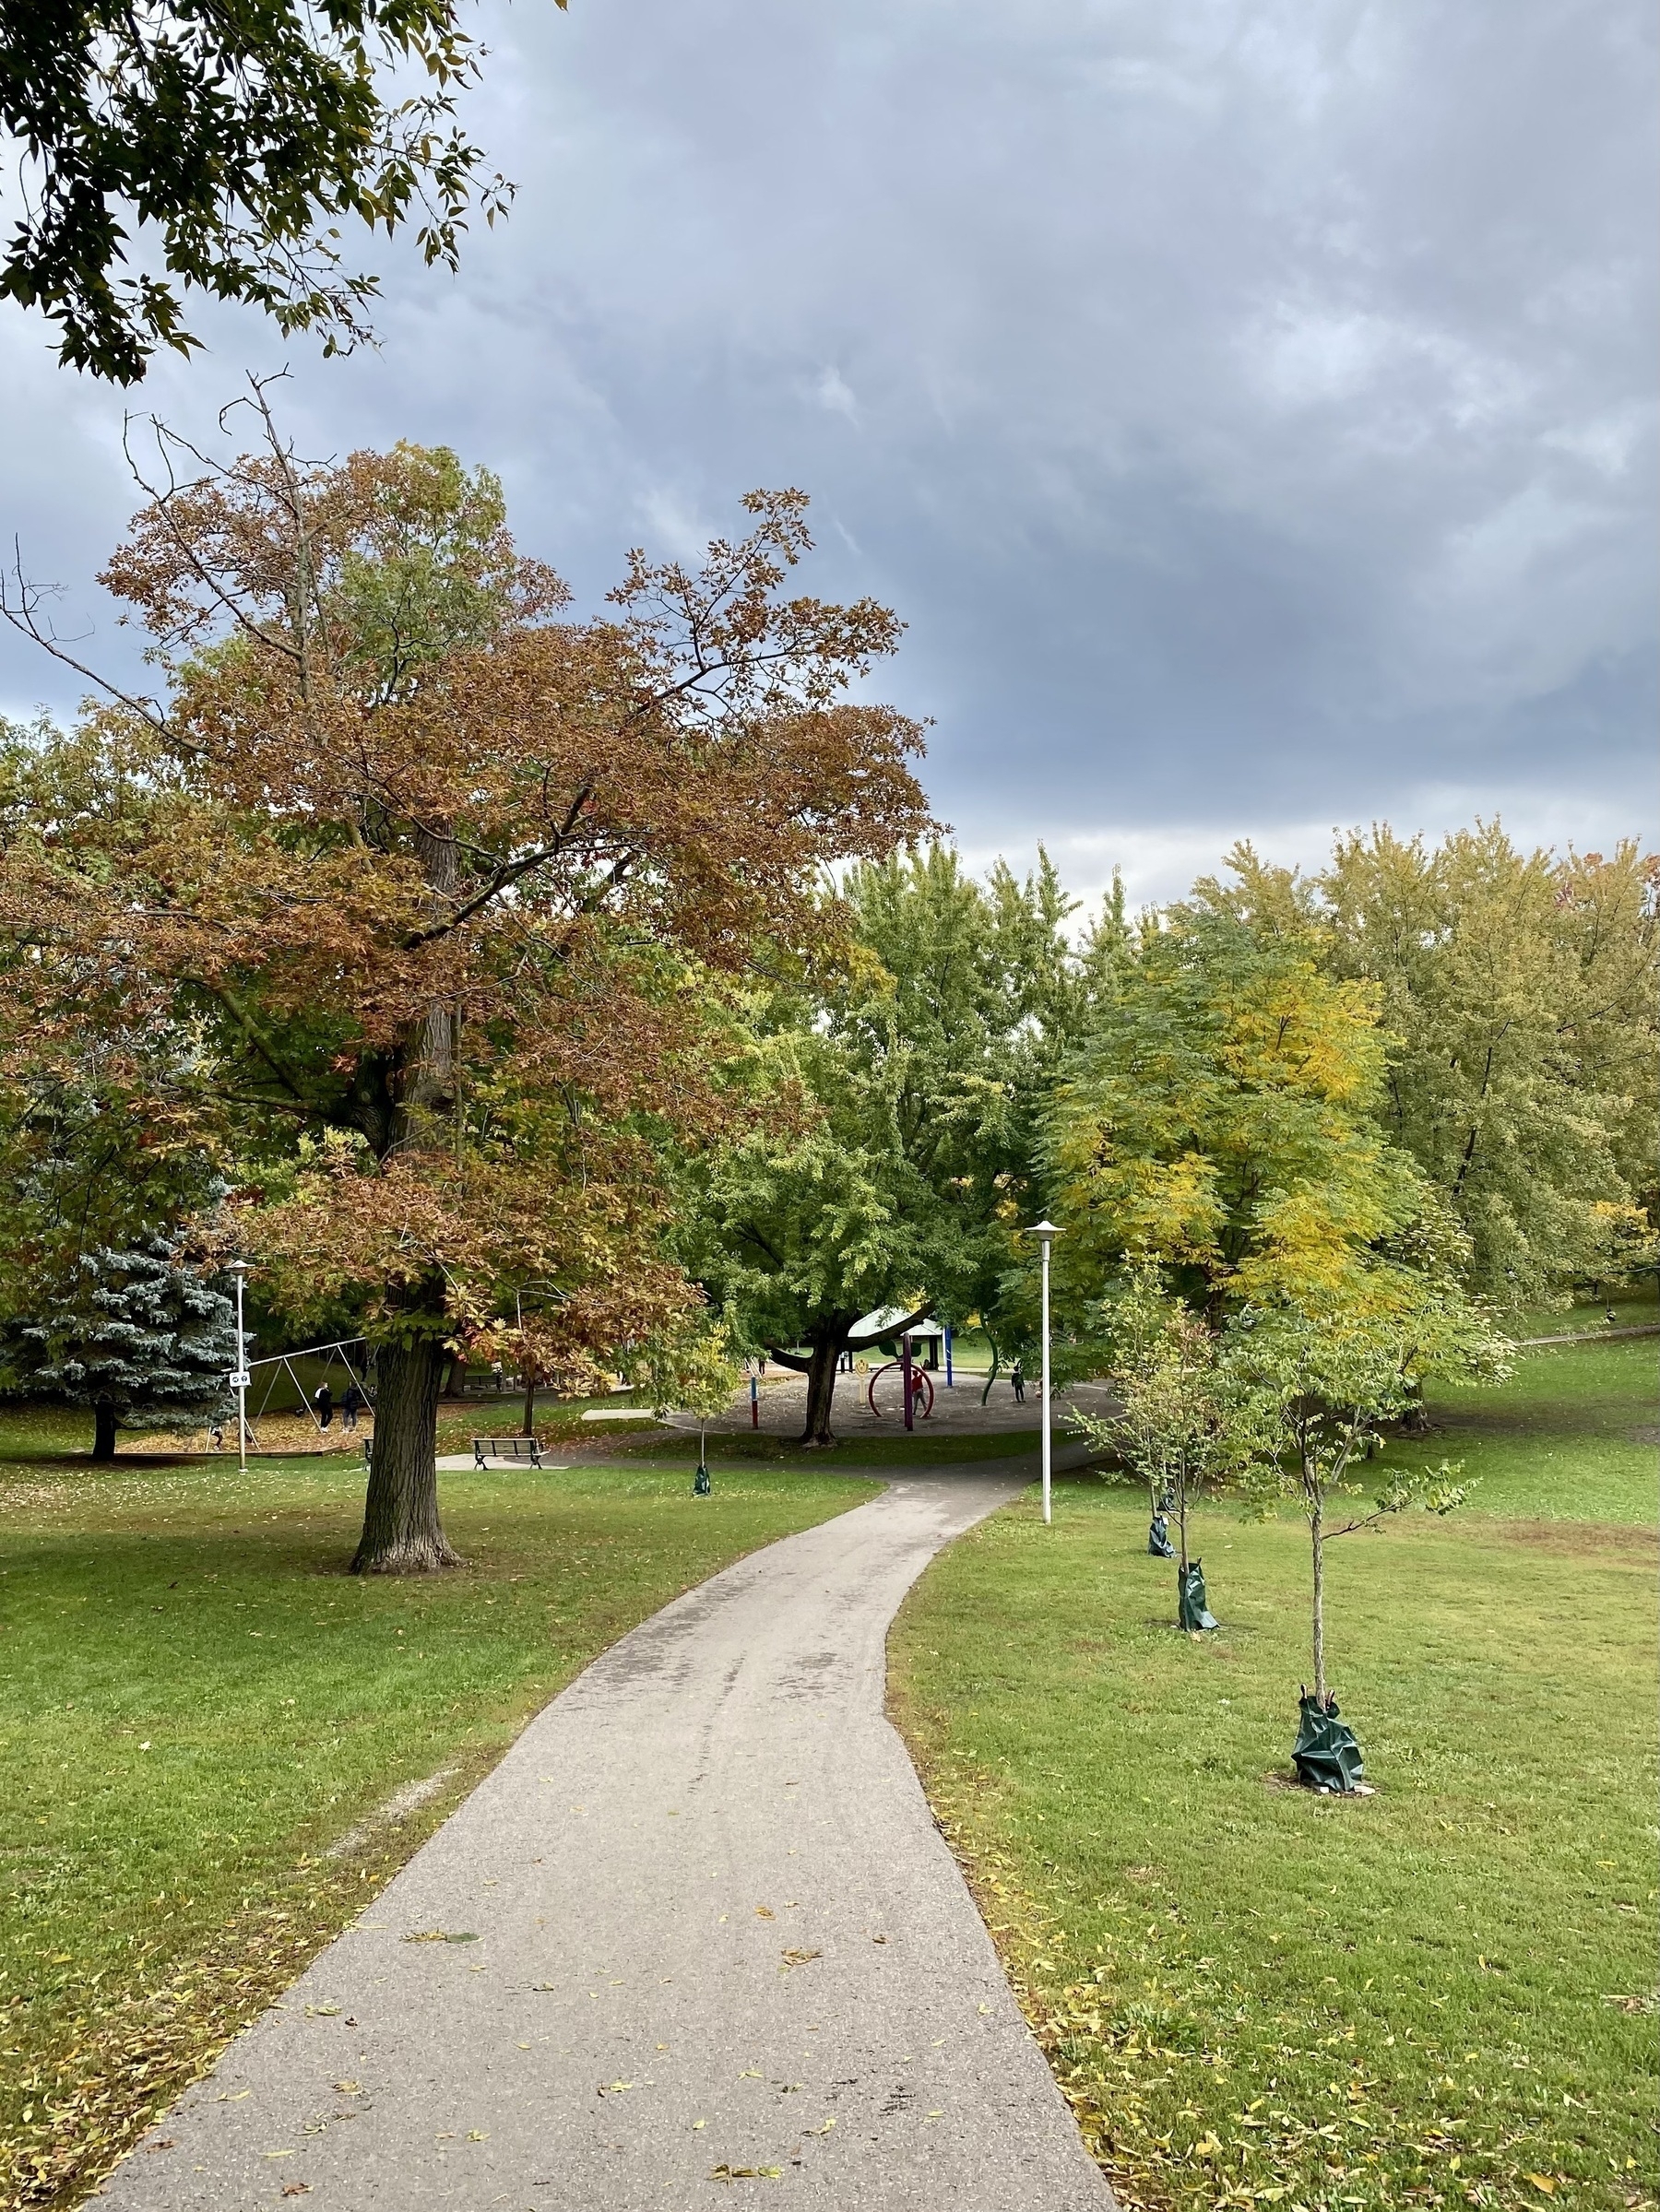 Path through a park with dark clouds